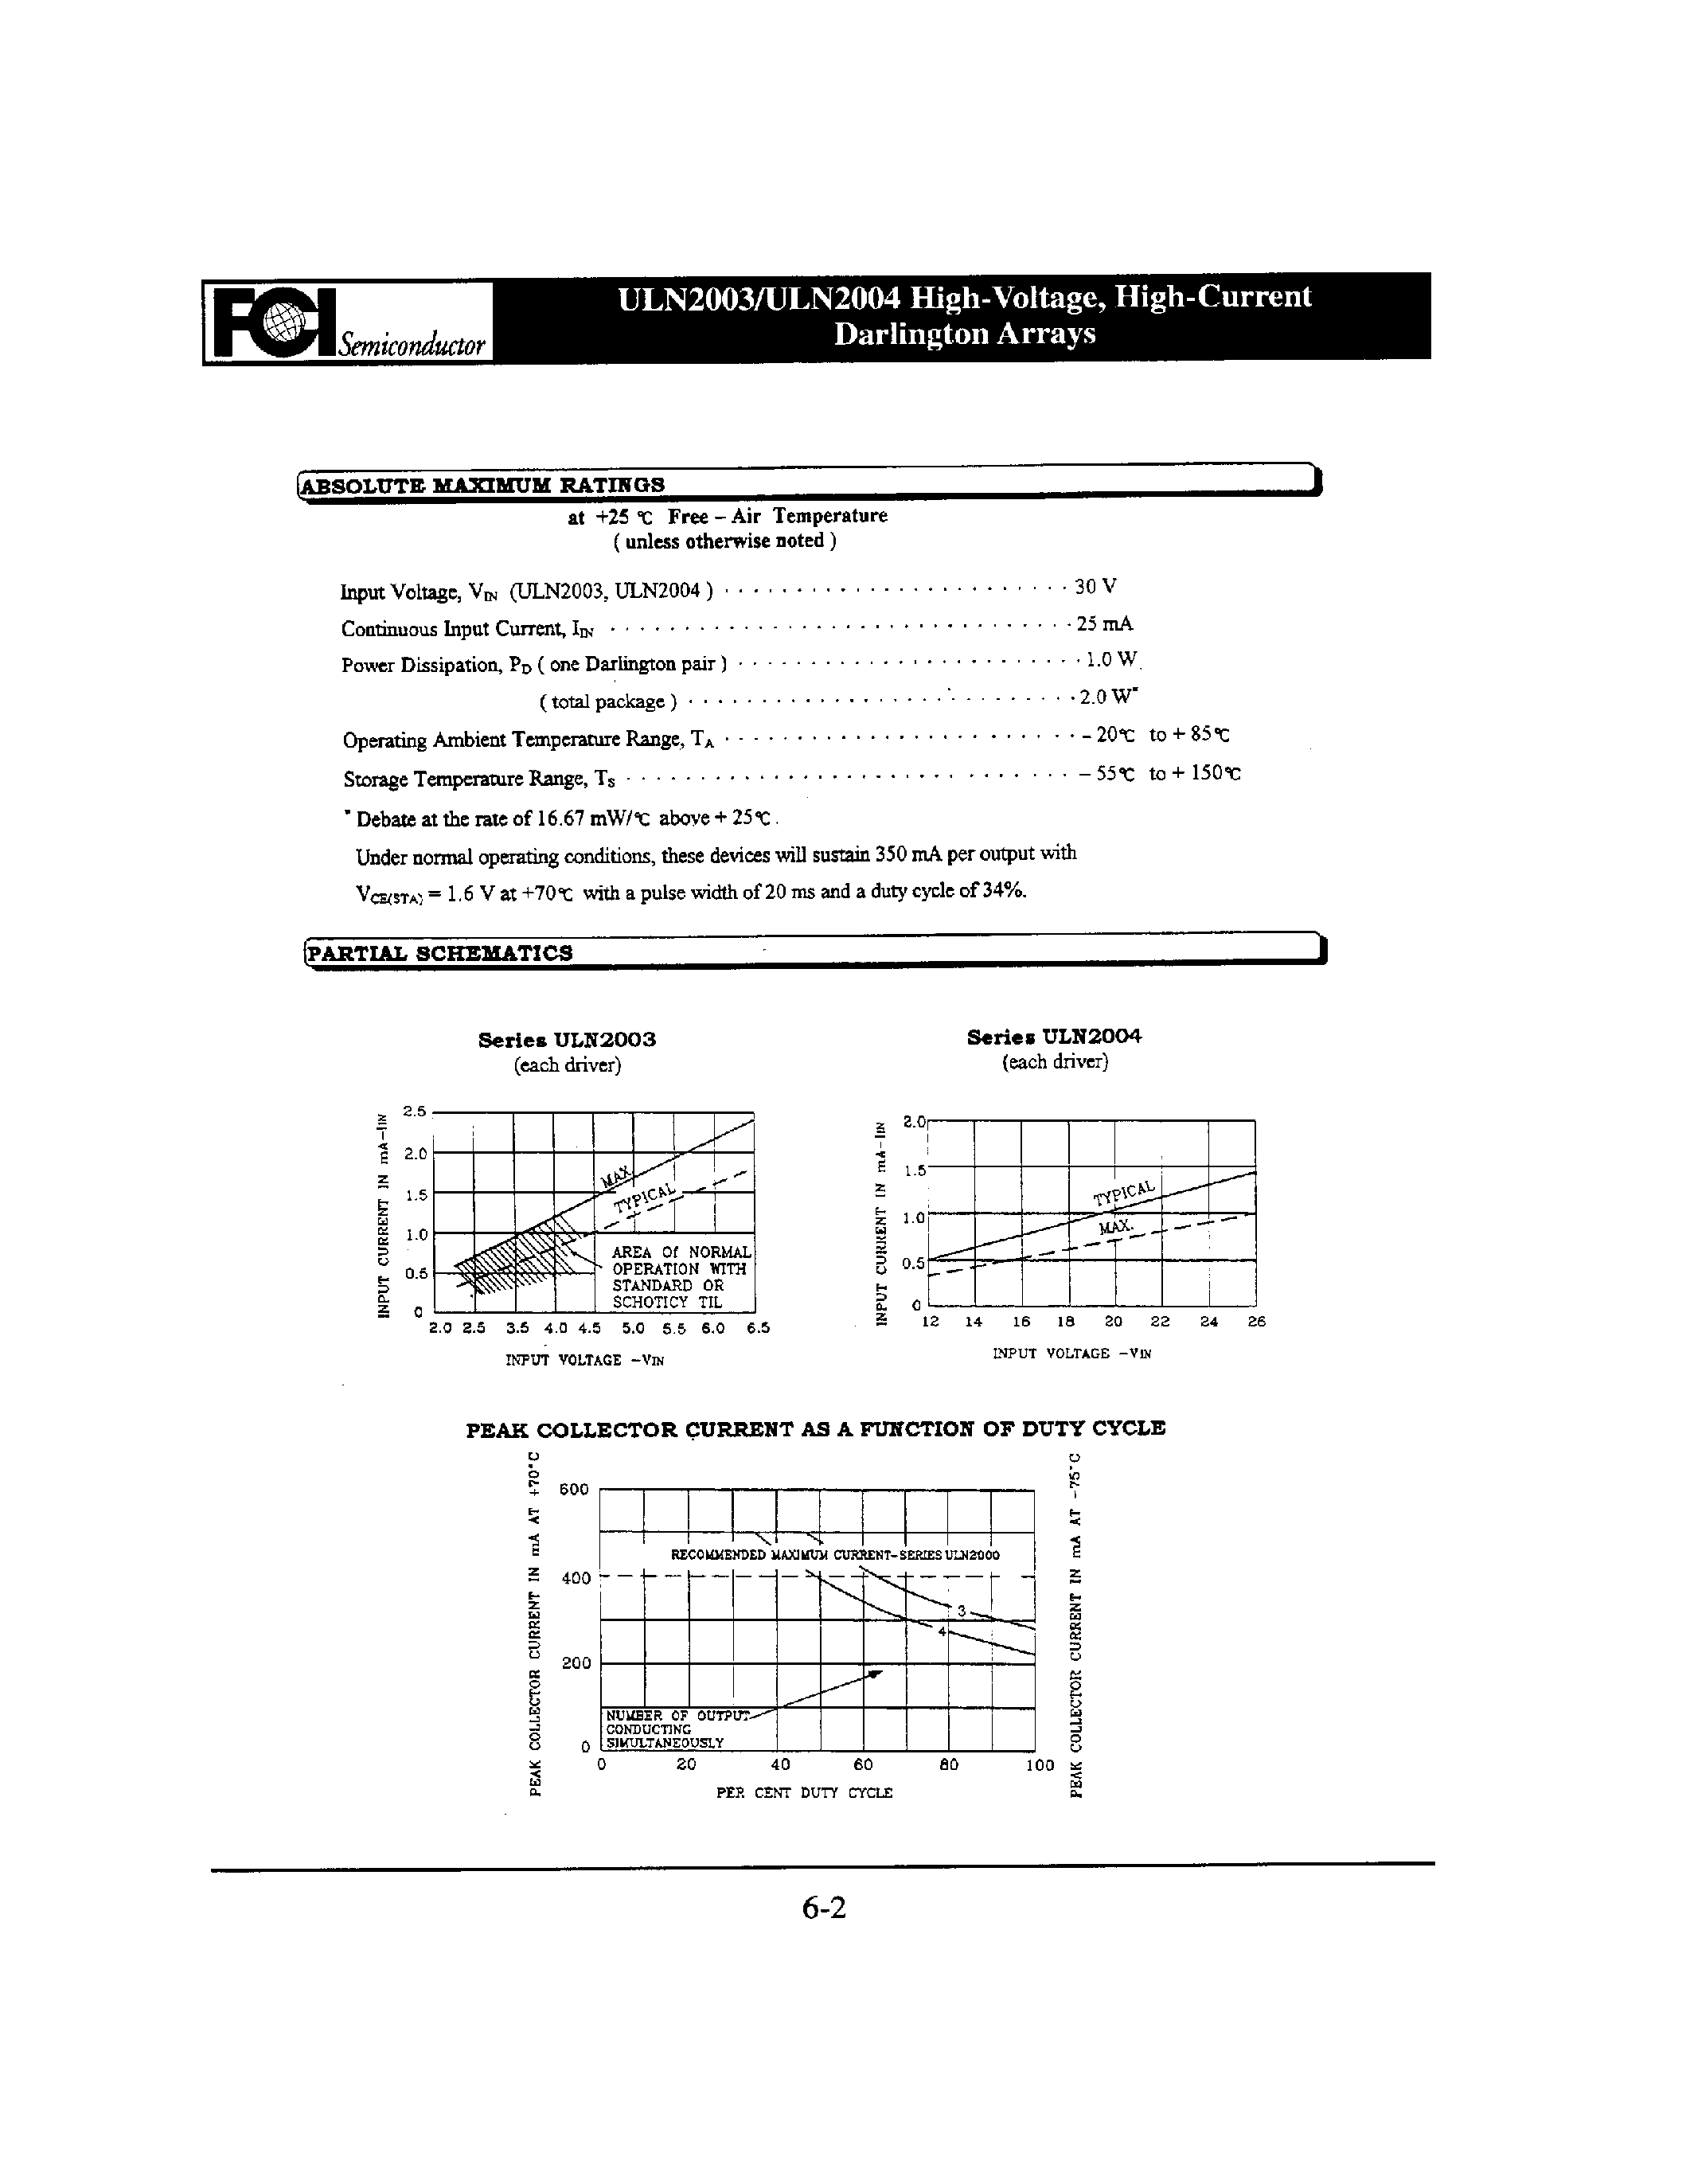 Datasheet ULN2003 - (ULN2003 / ULN2004) High-Voltage High-Current Darlington Arrays page 2